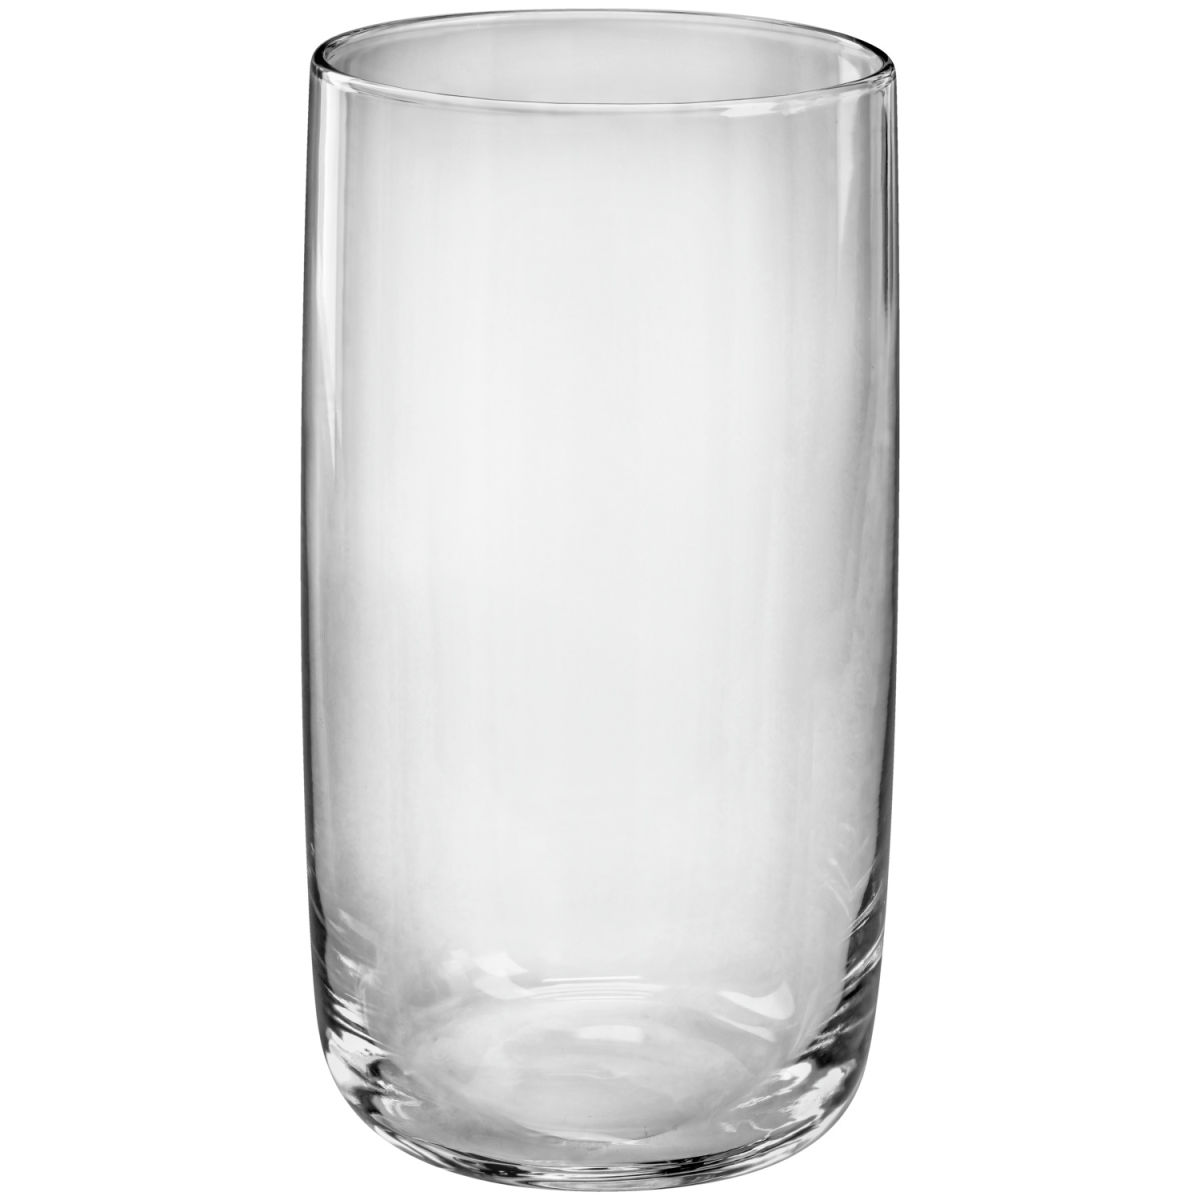 Pasabahçe Longdrinkglas Iconic; 365ml, 6.7x12.9 cm (ØxH); transparant; 6 stuk / verpakking